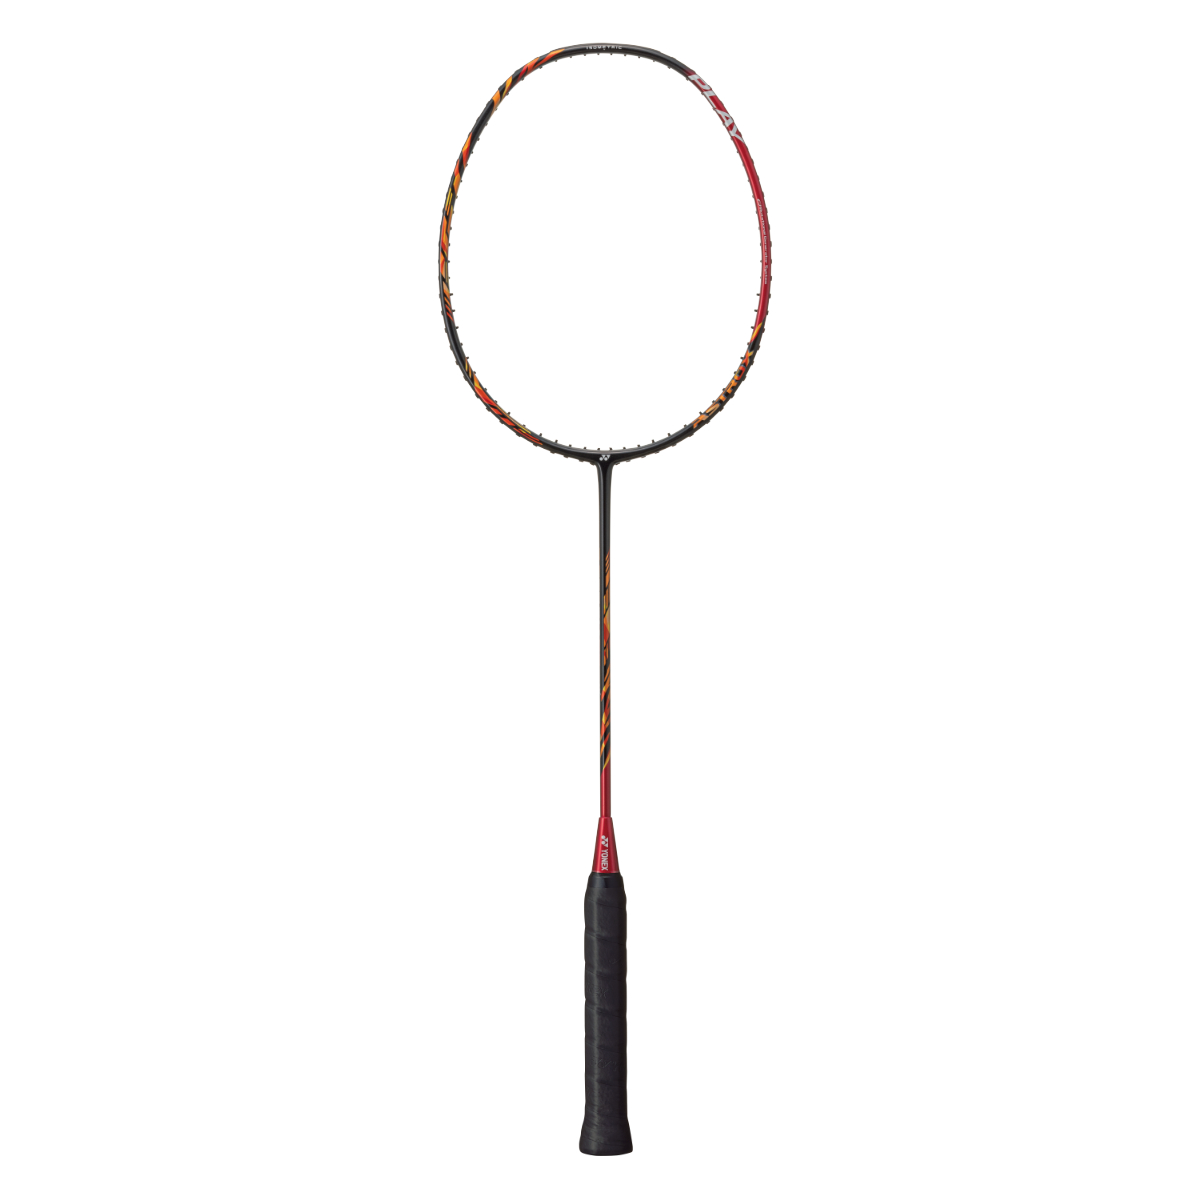 Badmintonová raketa Yonex Astrox 99 Play Cherry + dárek obal zdarma